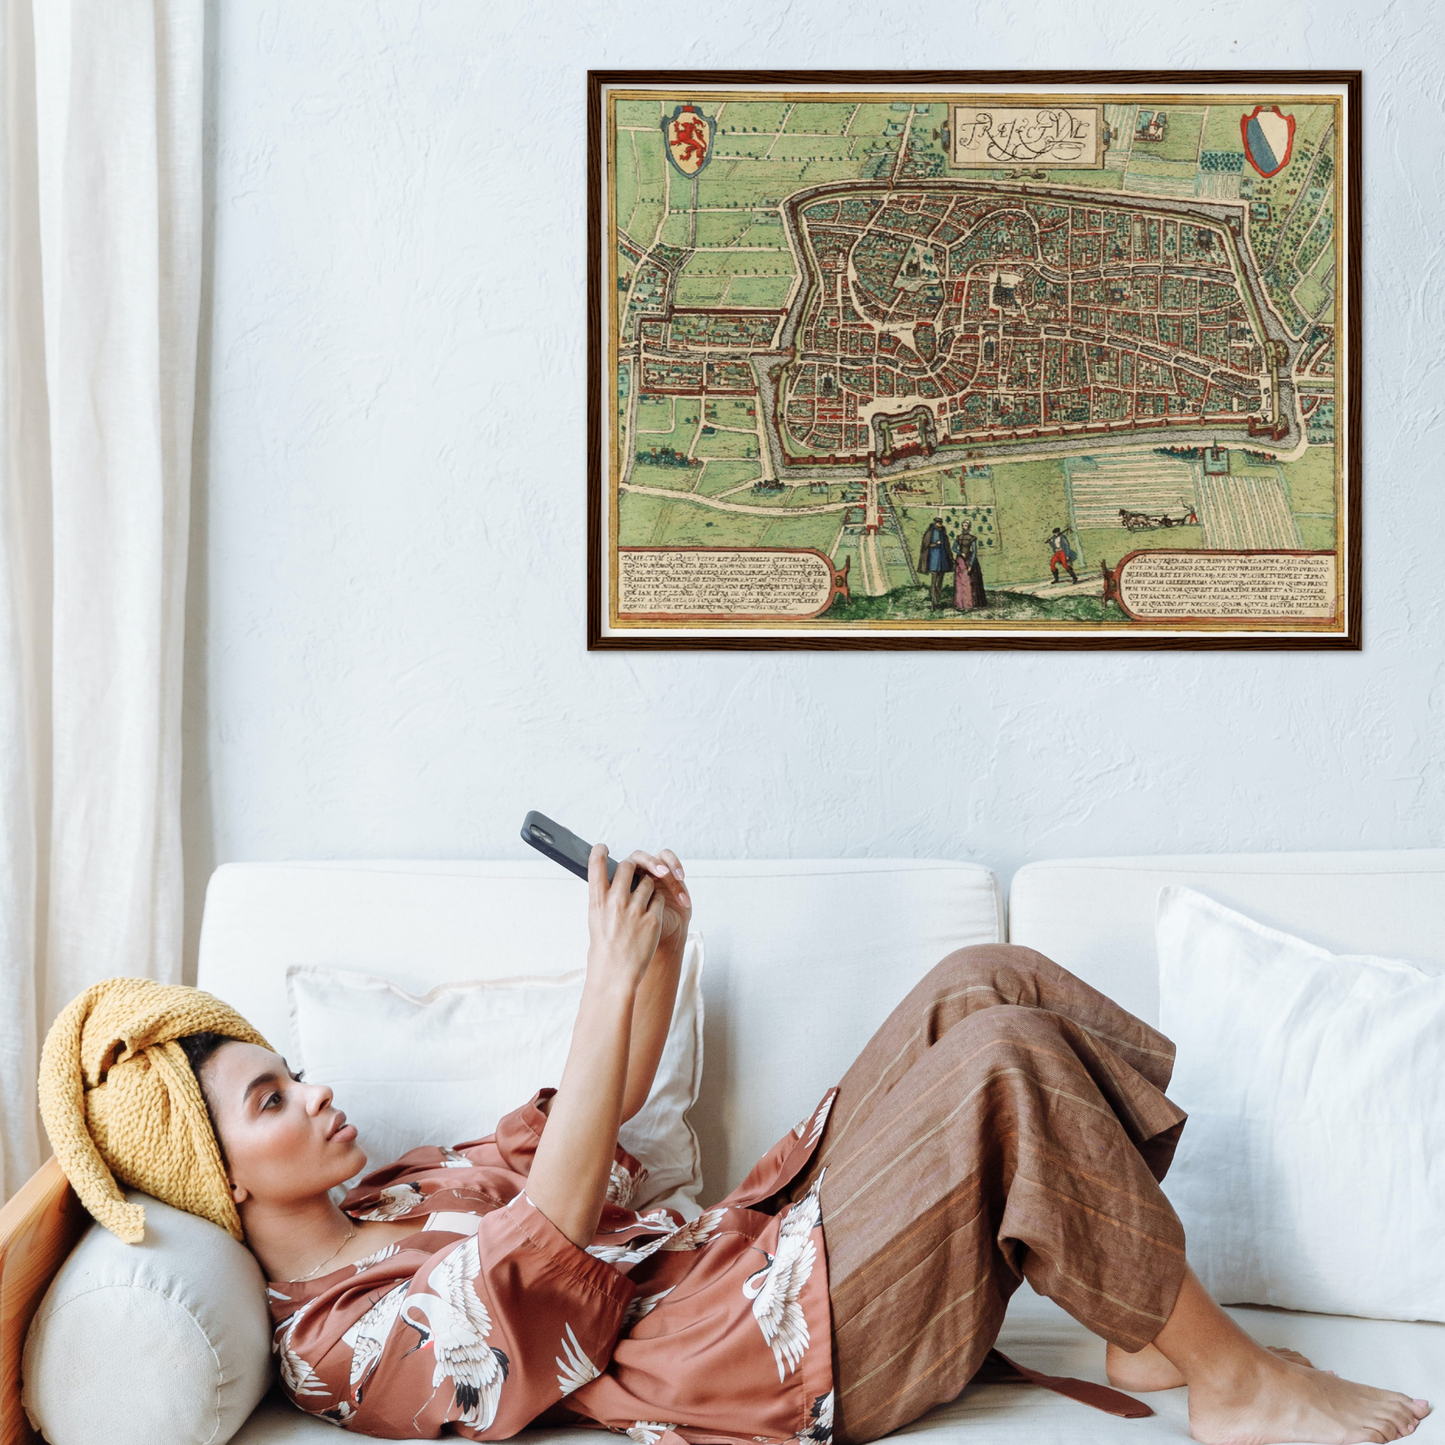 Historischer Stadtplan Utrecht um 1582